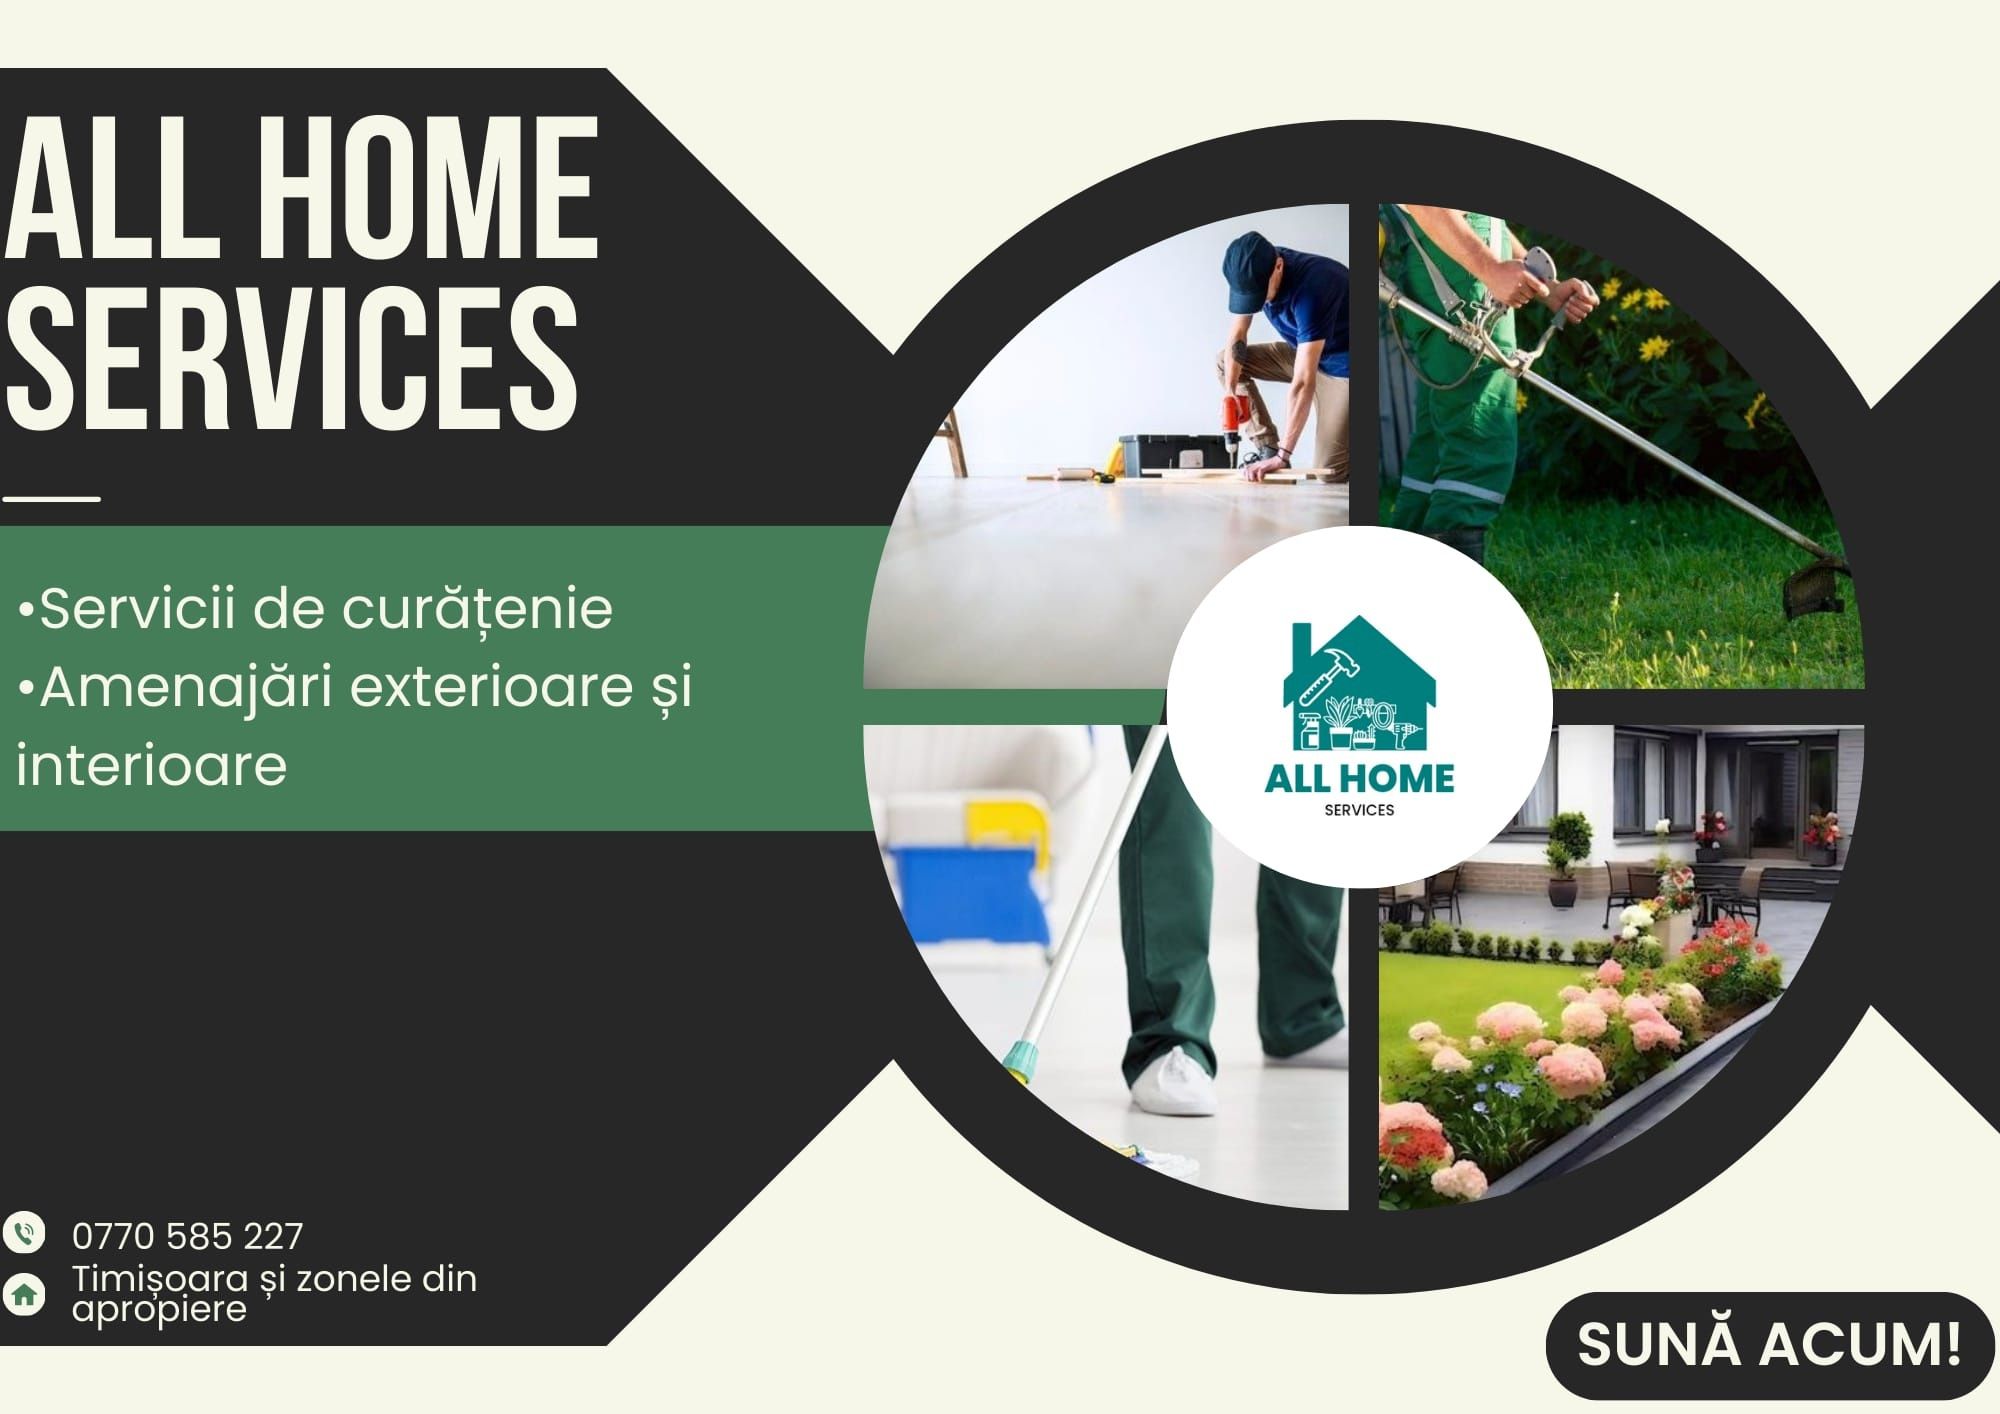 All Home Services (curatenie, amenajari, constructii)